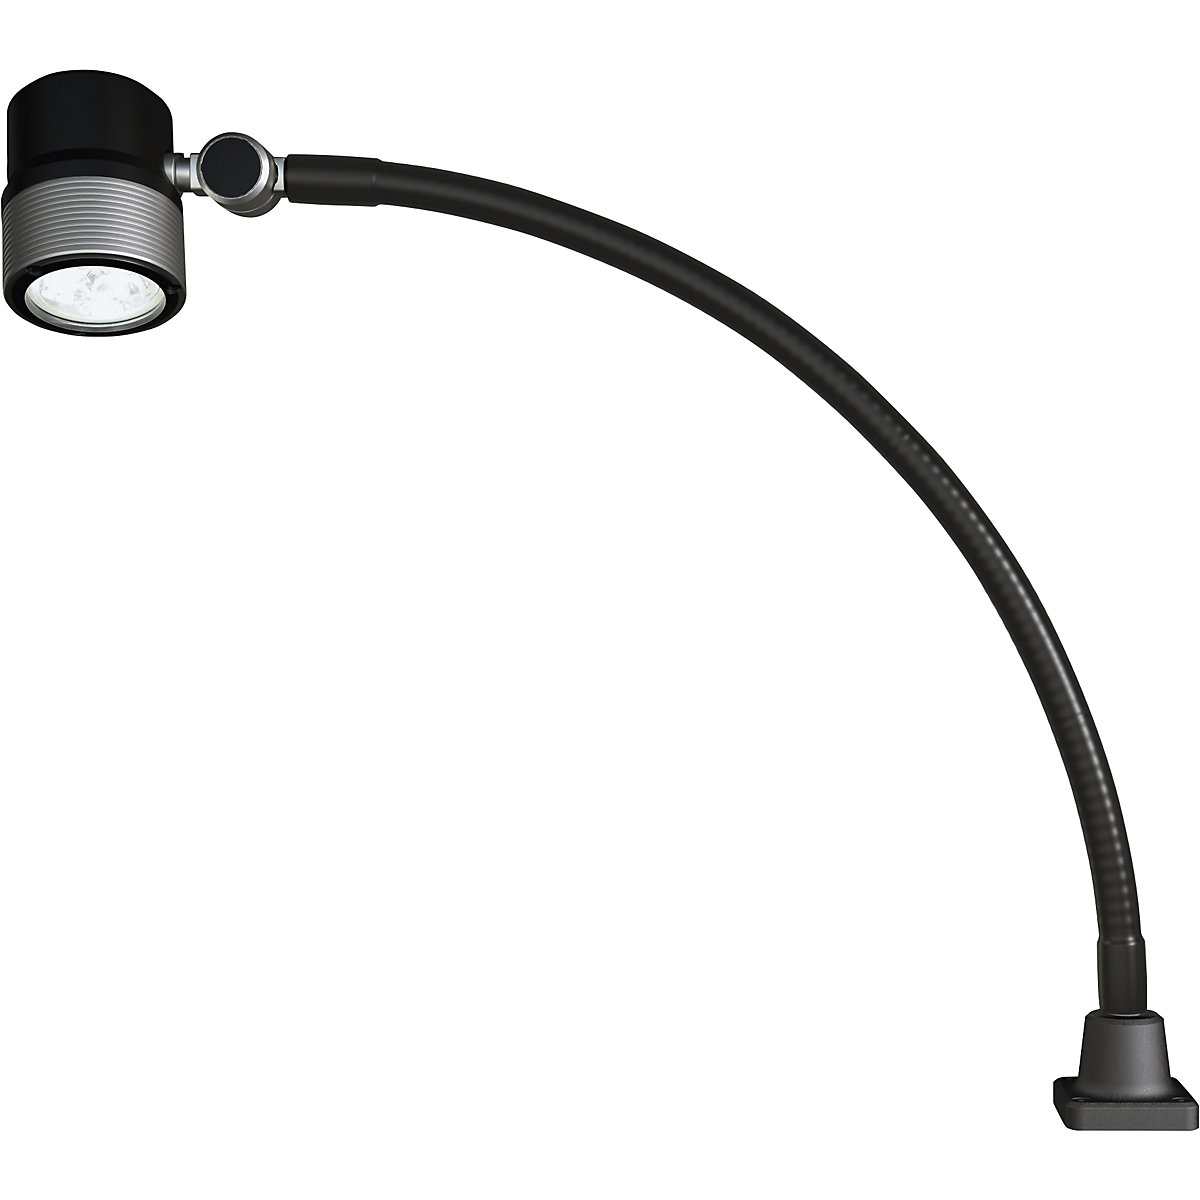 LED-machinelamp met flexibele arm - Waldmann